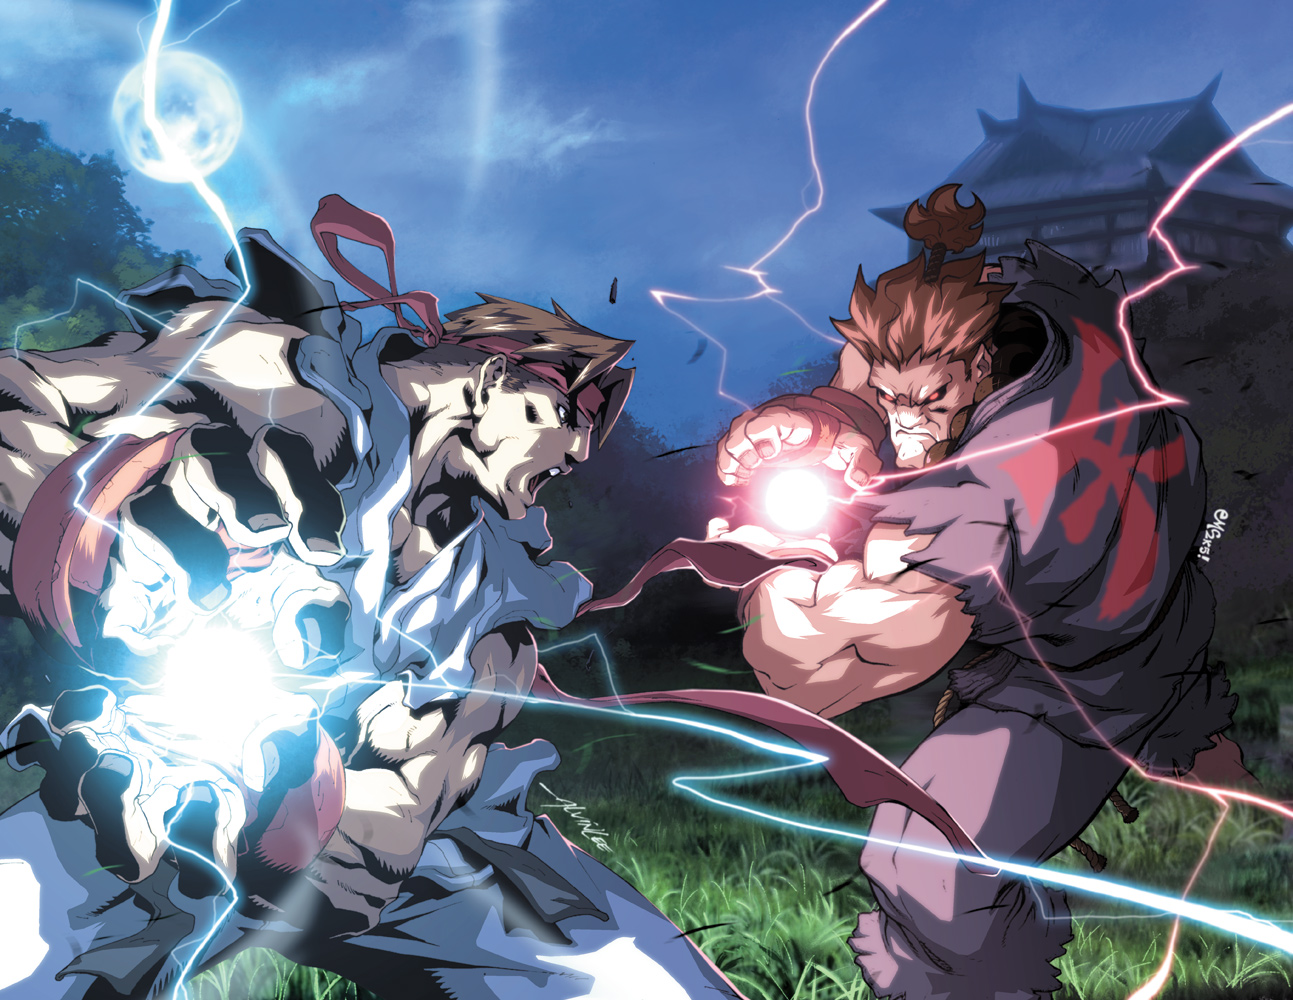 Street Fighter IV Street Fighter Alpha 3 Ryu Akuma M. Bison PNG, Clipart,  Adventurer, Anime, Arcade